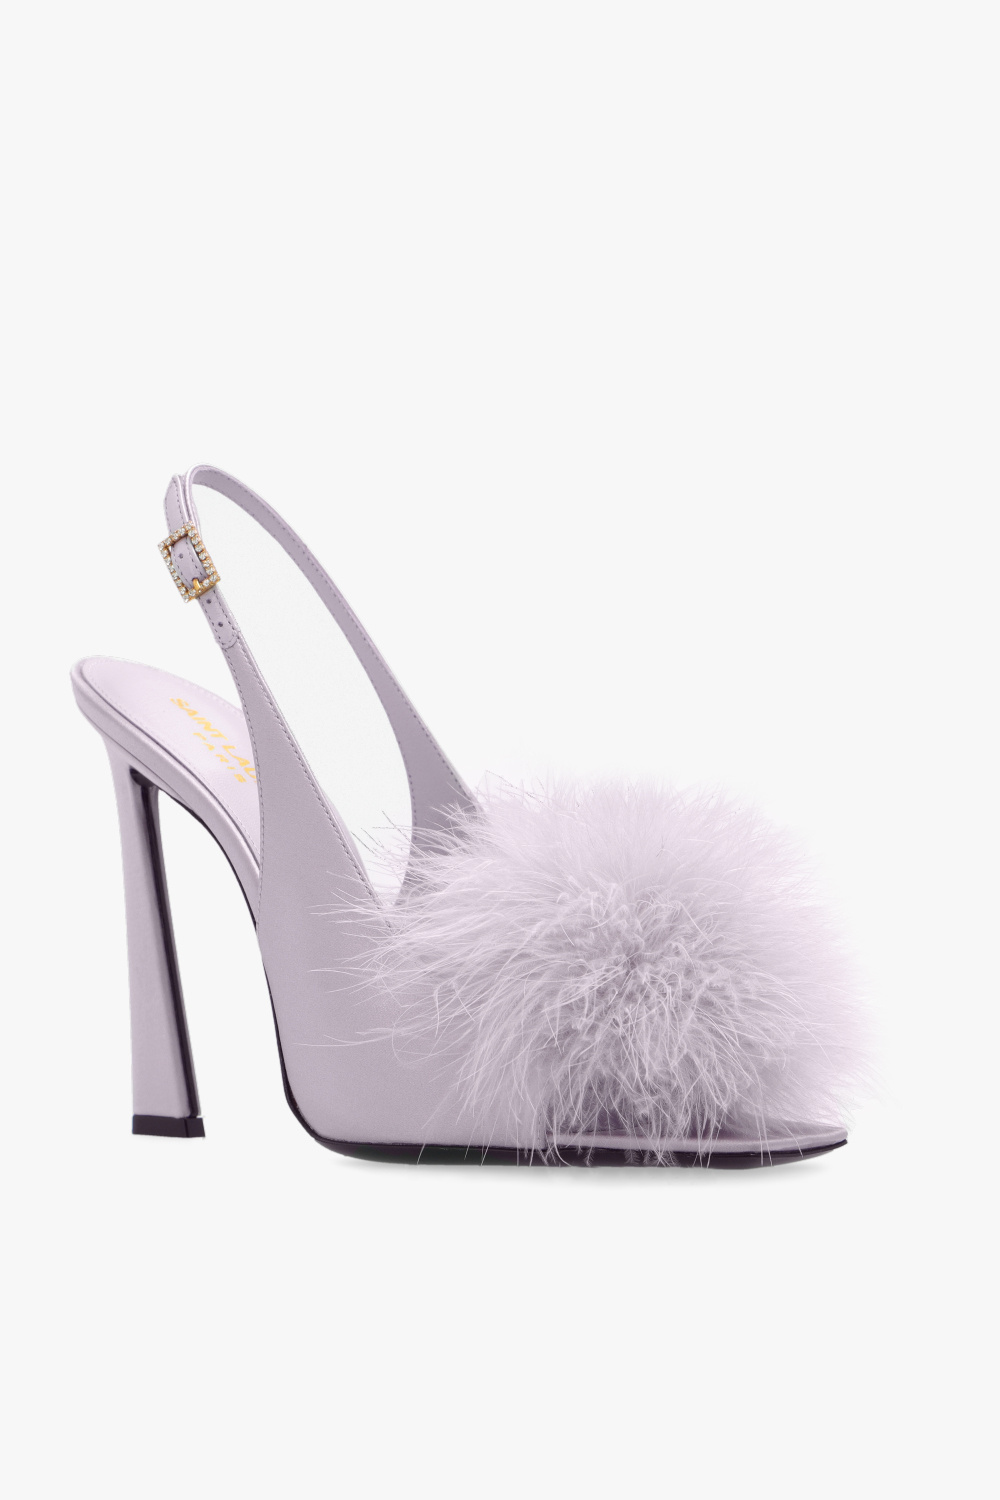 Saint Laurent ‘Mae’ heeled sandals